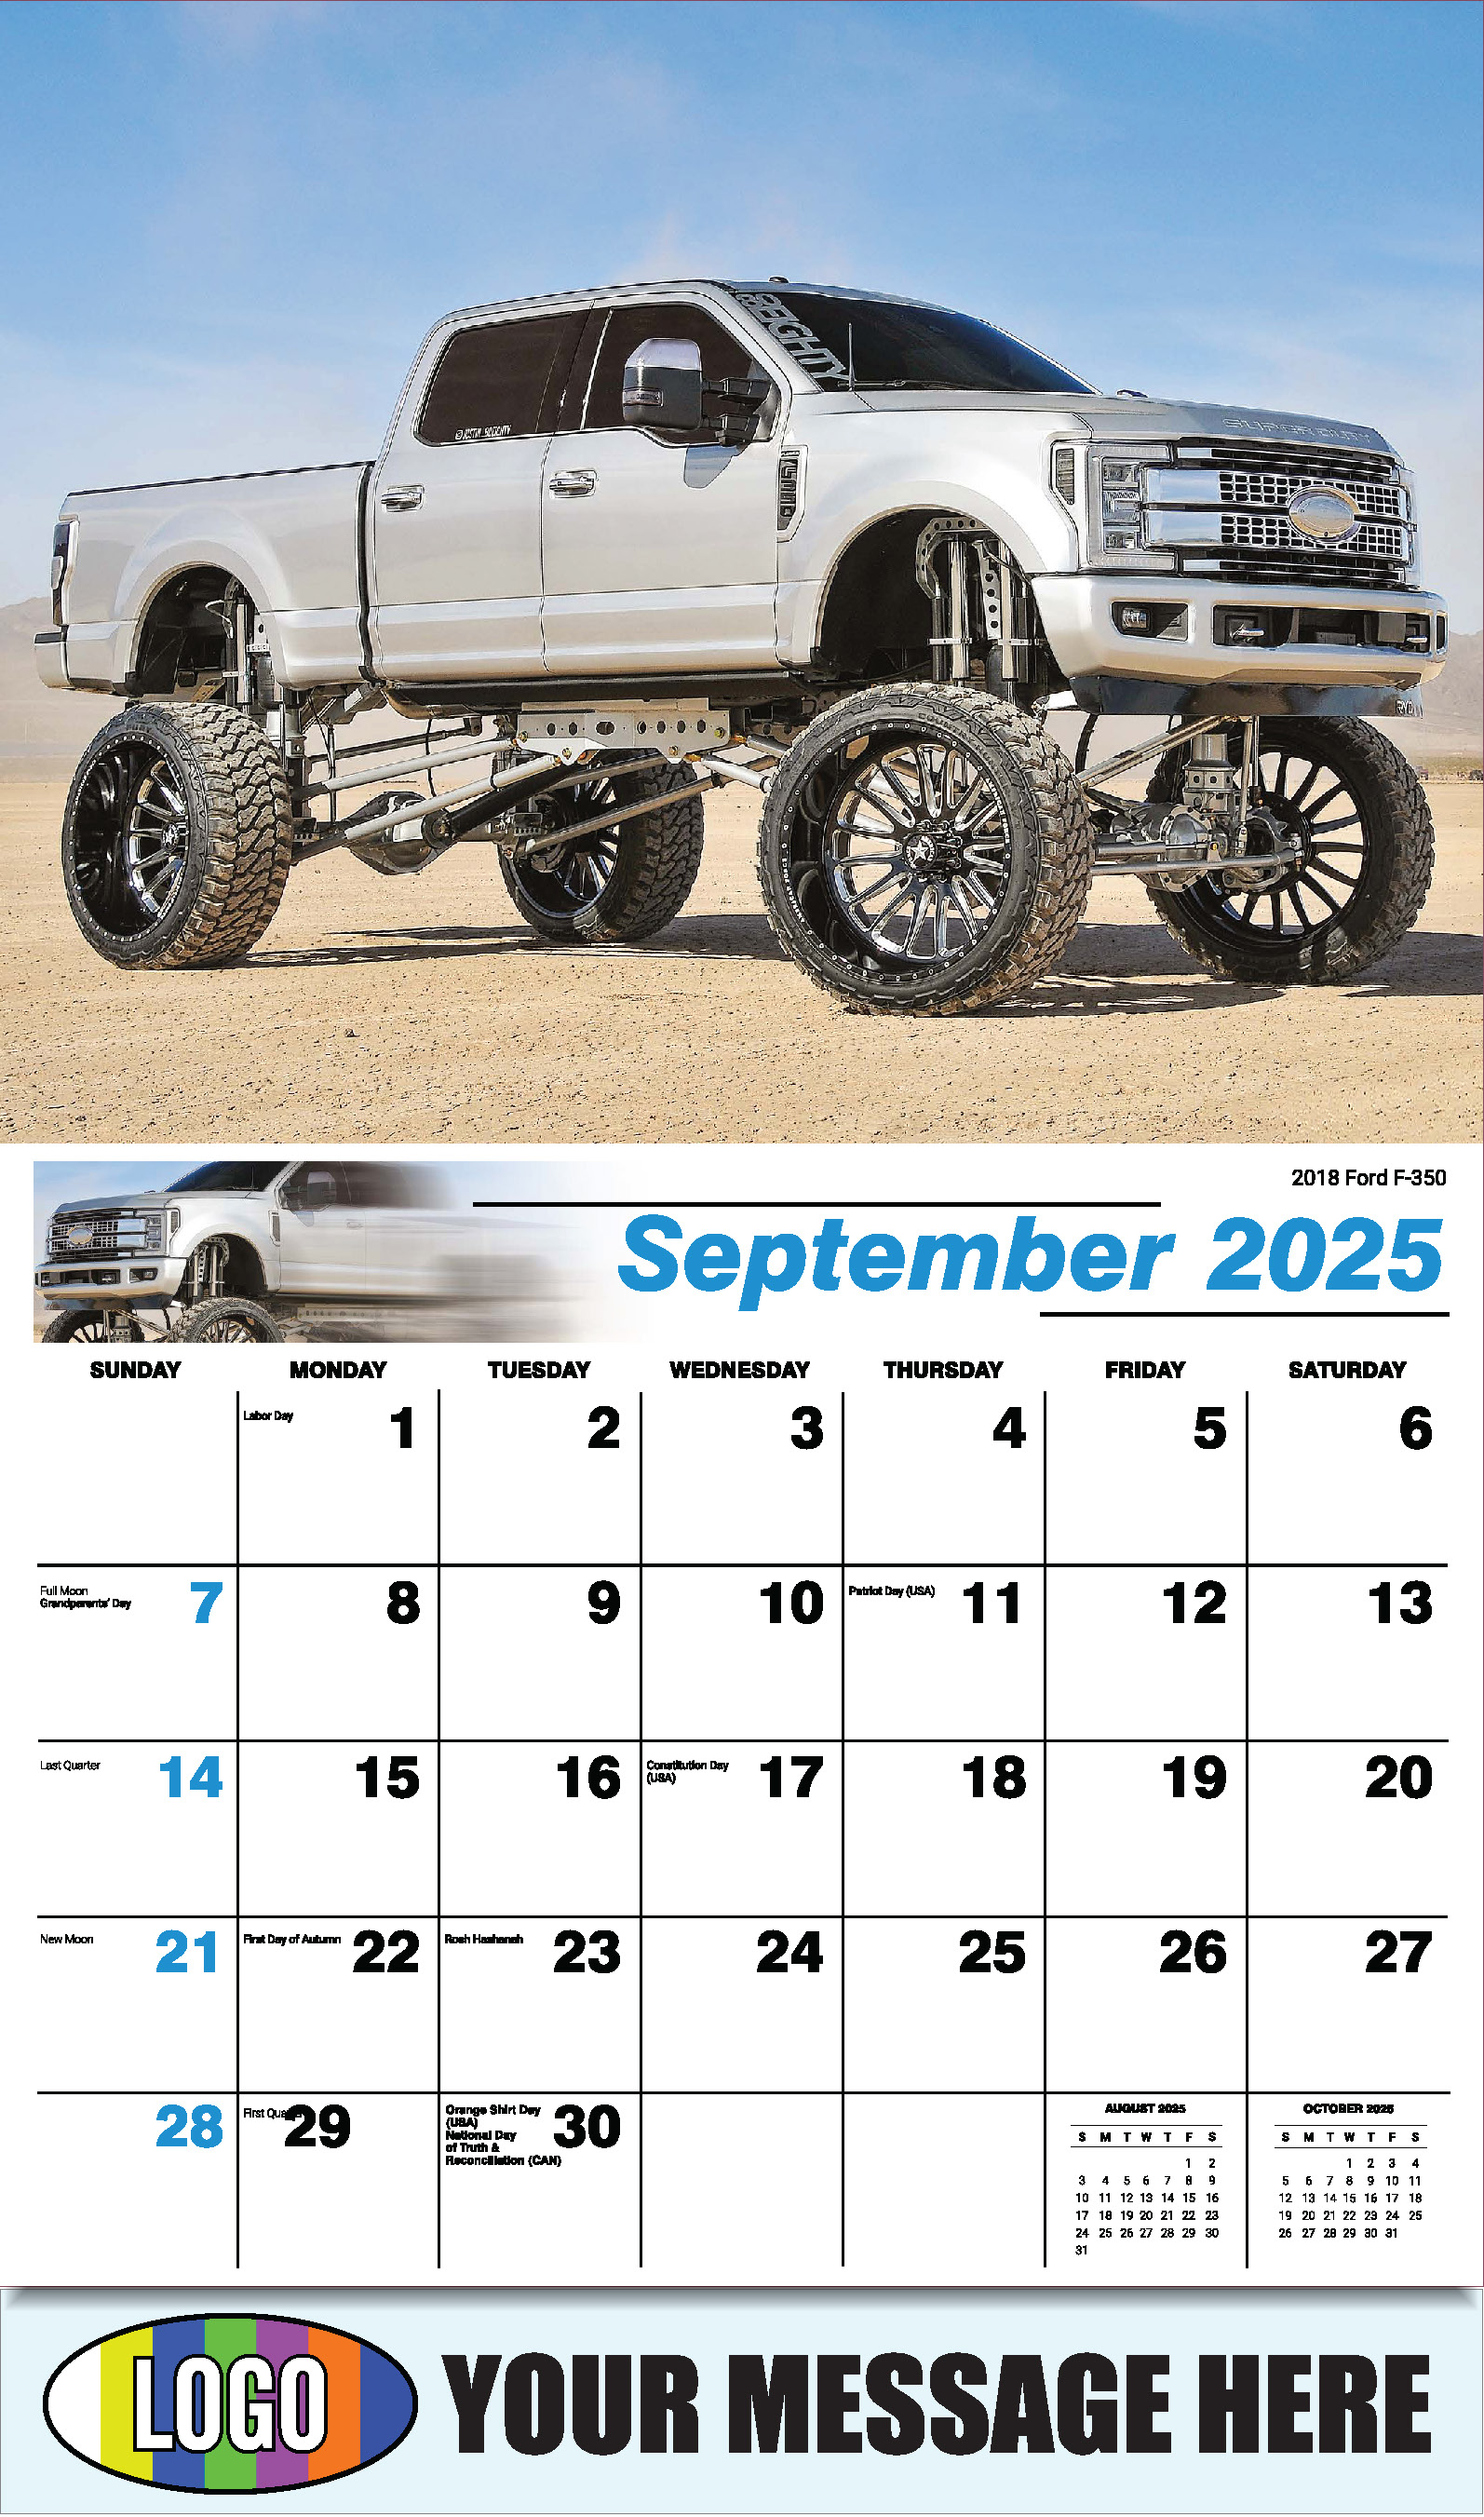 Pumped-Up Pickups 2025 Automotive Business Promo Calendar - September